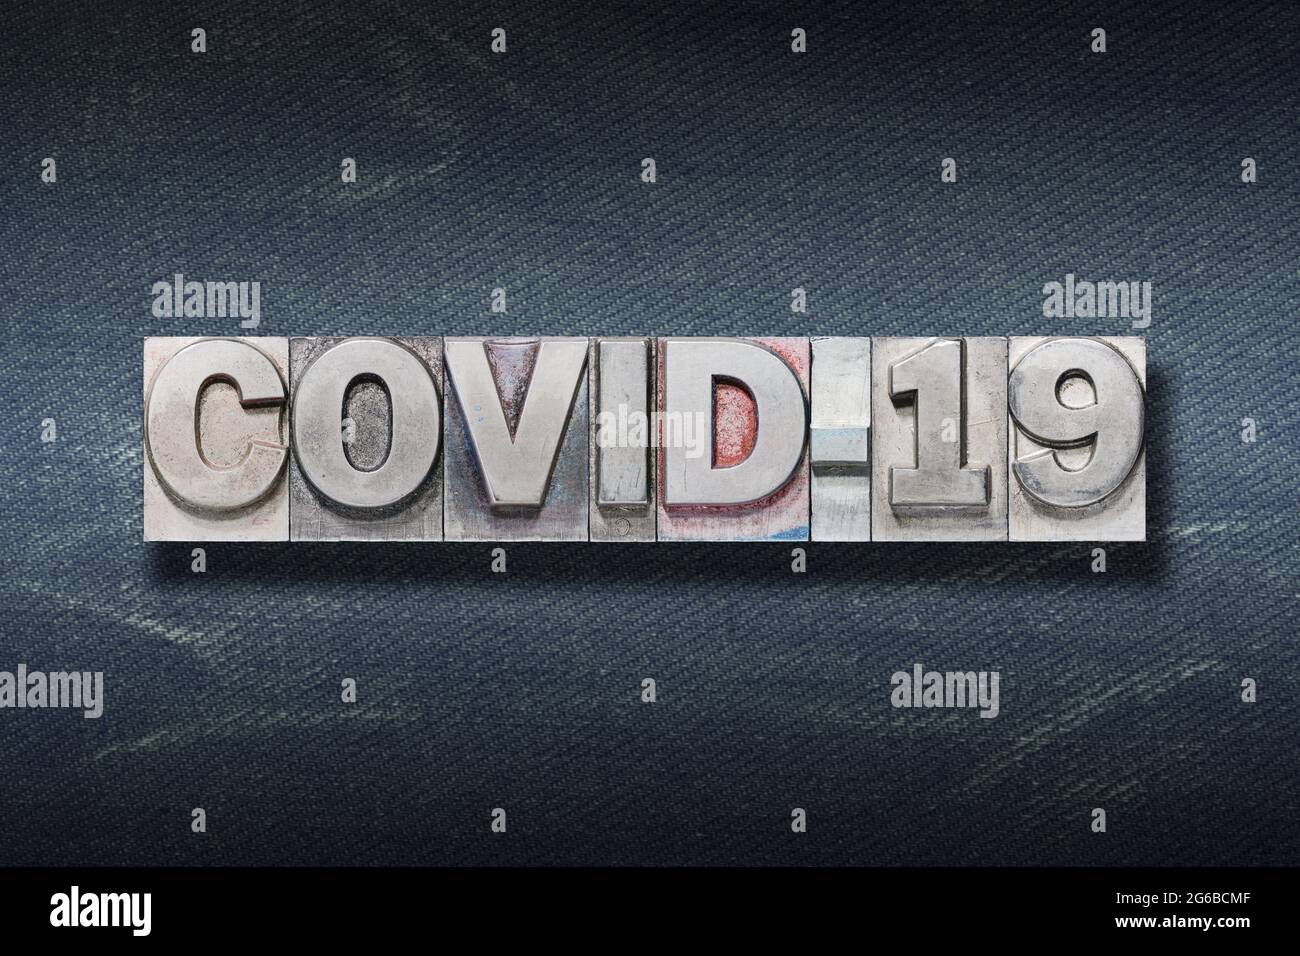 Covid-19 Coronavirus Namenskürzel aus Metallic-Buchdruck auf dunklem Jeans-Hintergrund Stockfoto